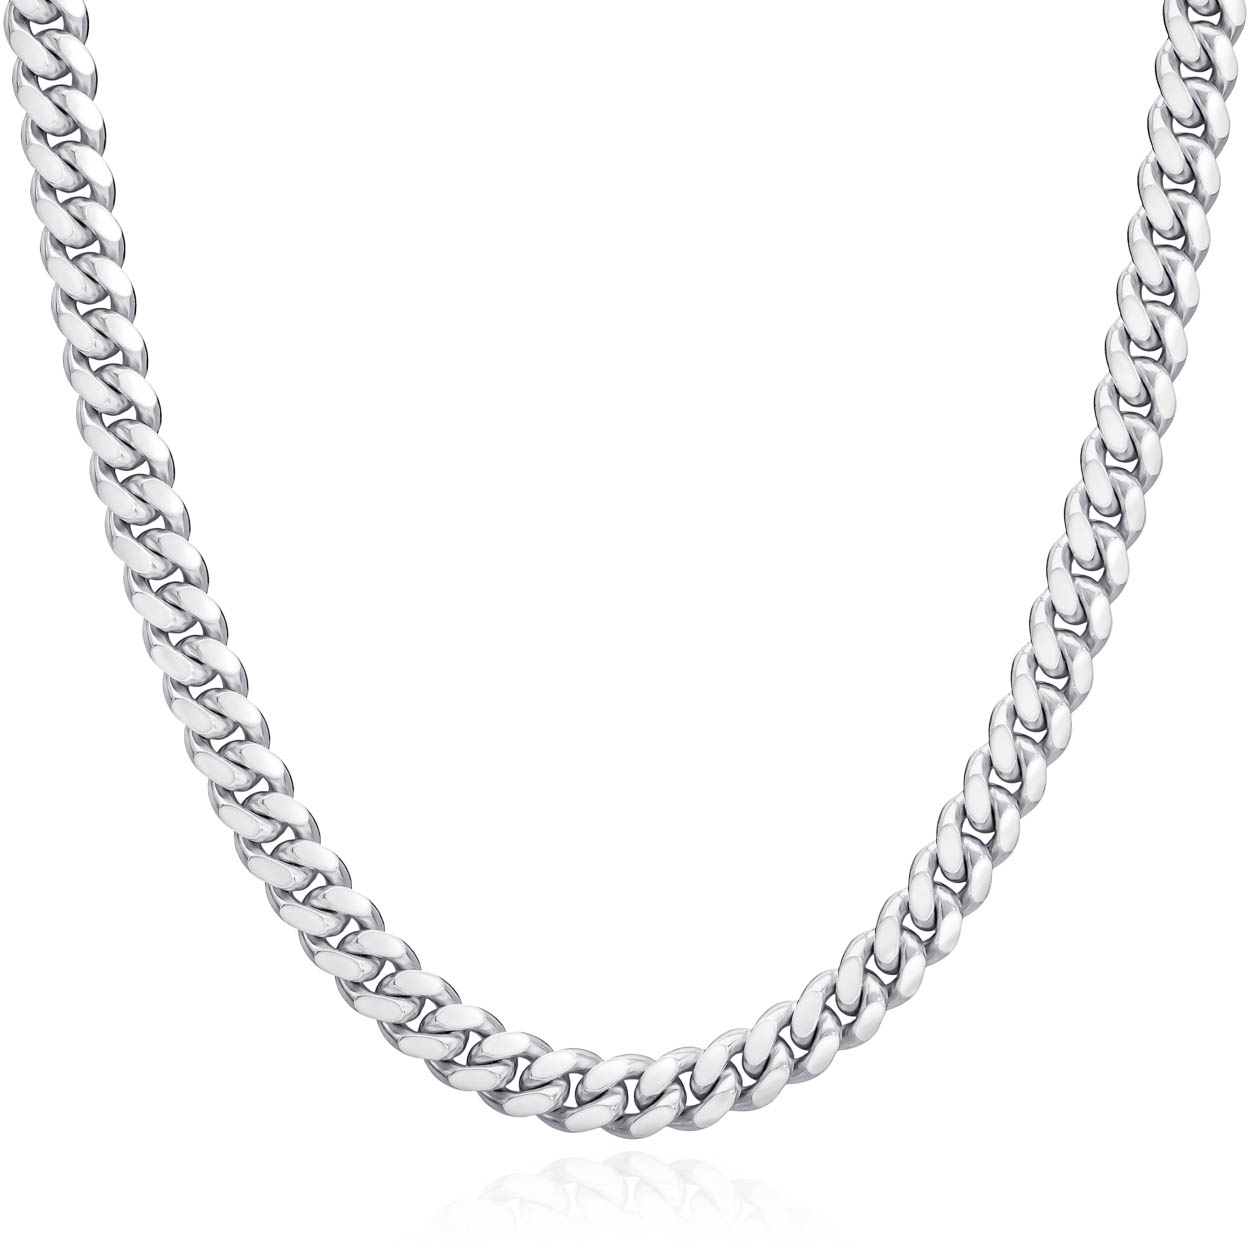 Silver chain Necklace,silver chain Necklace,silver link Necklace